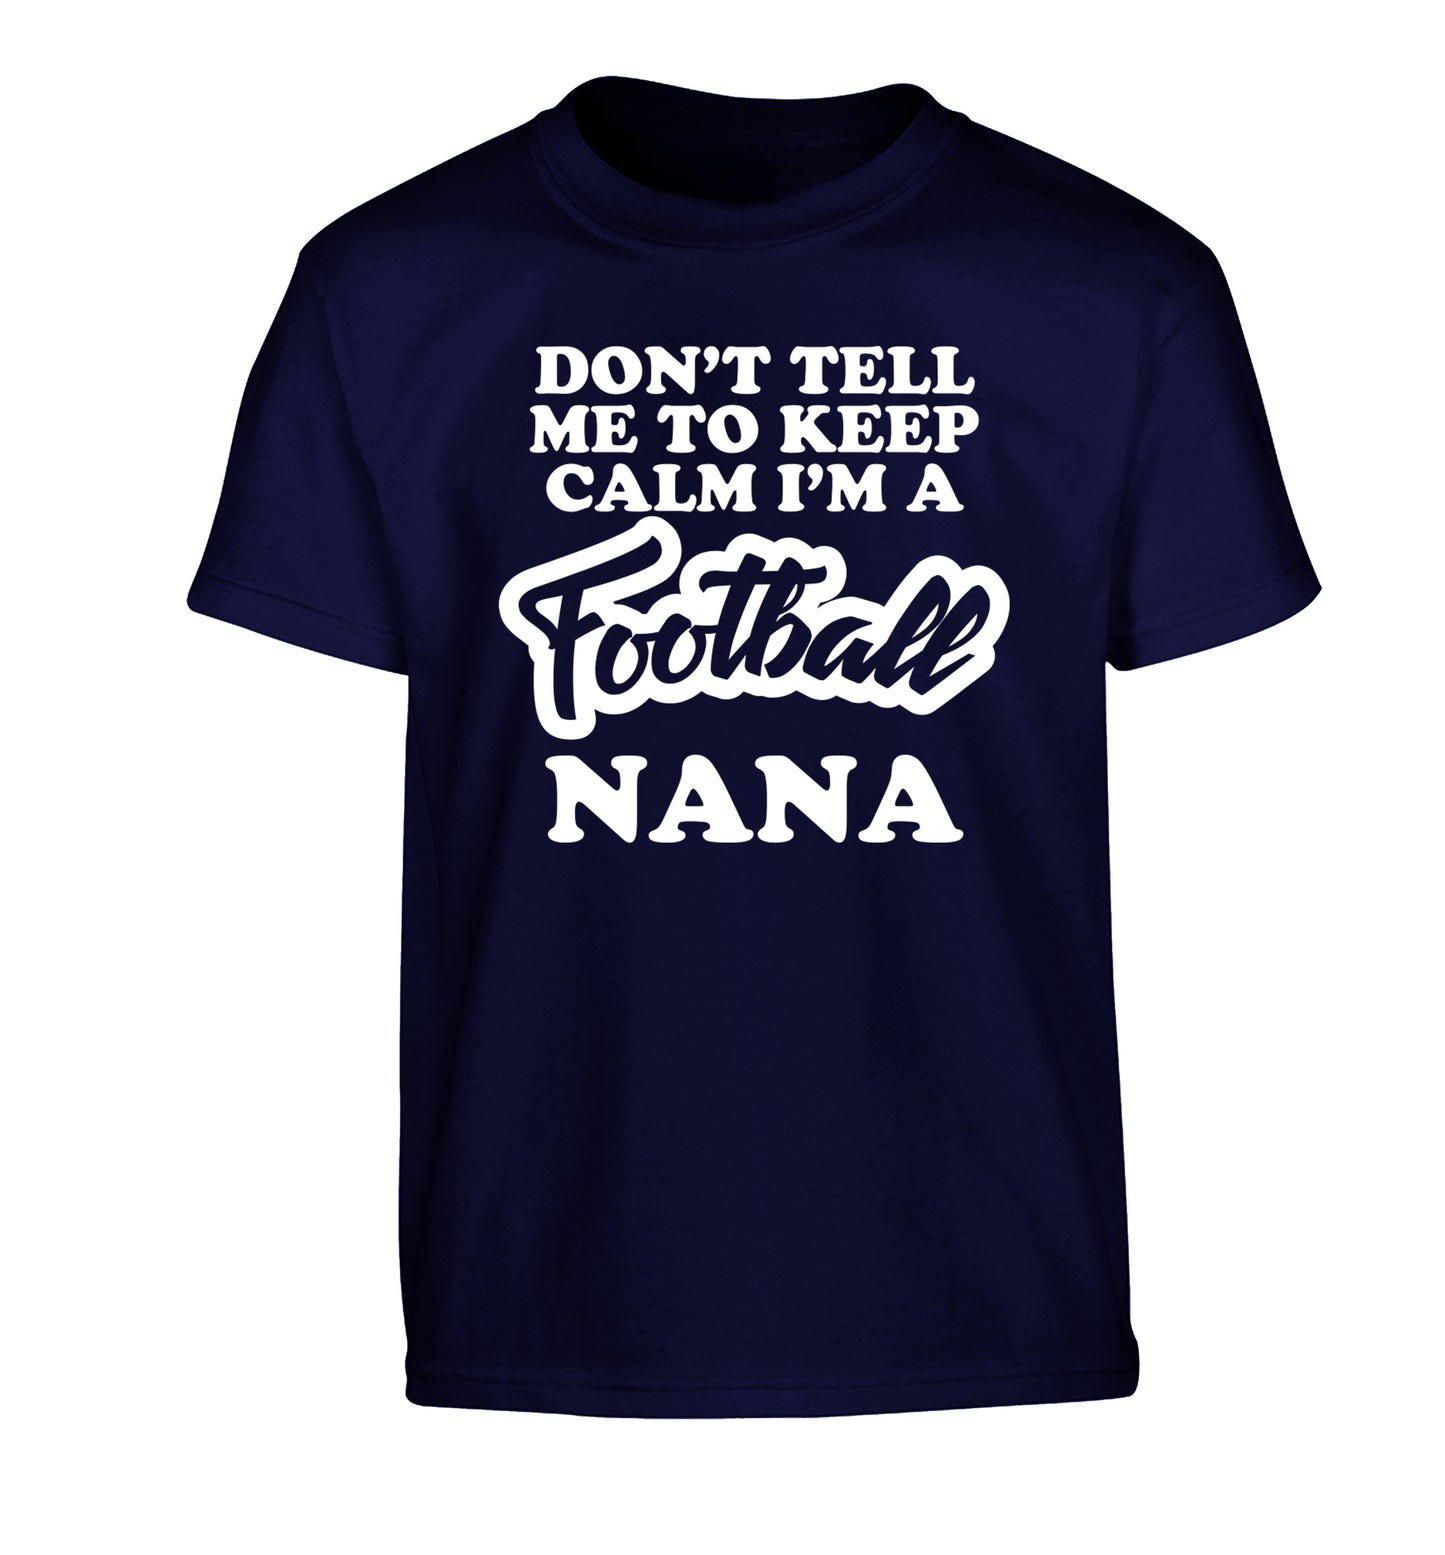 Don't tell me to keep calm I'm a football nana Children's navy Tshirt 12-14 Years